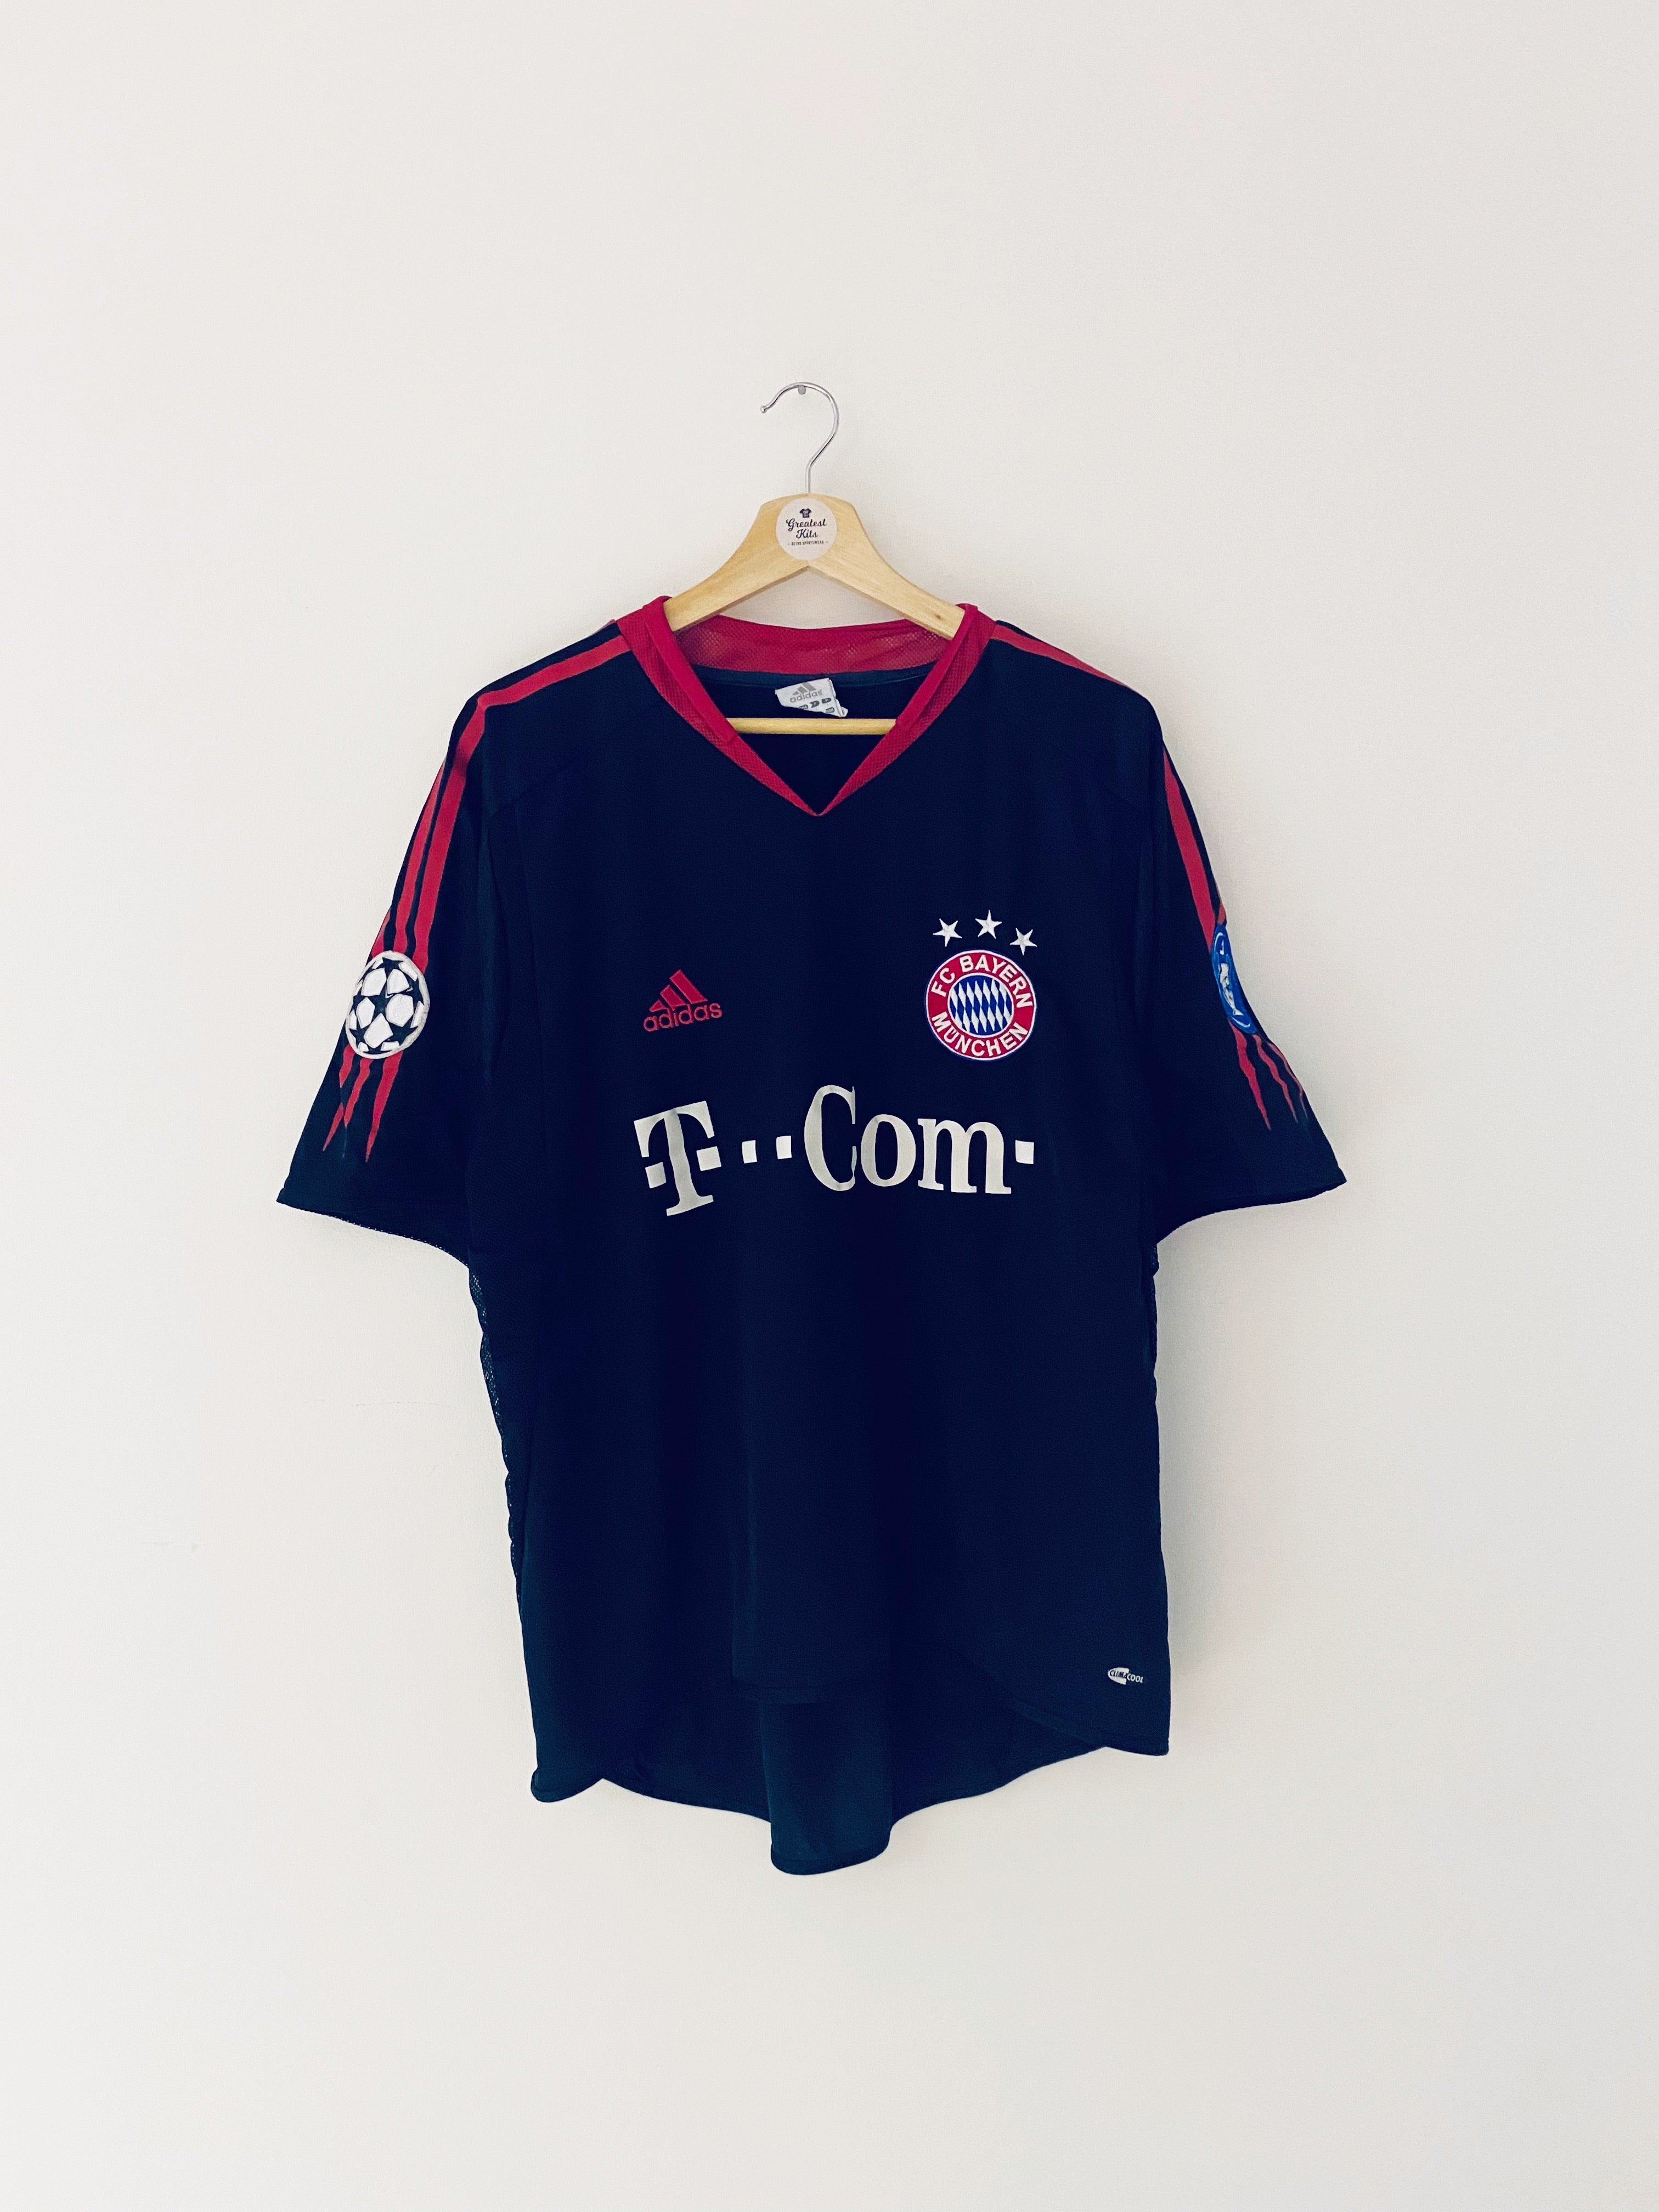 2004/05 Bayern Munich CL Shirt (L) 8.5/10